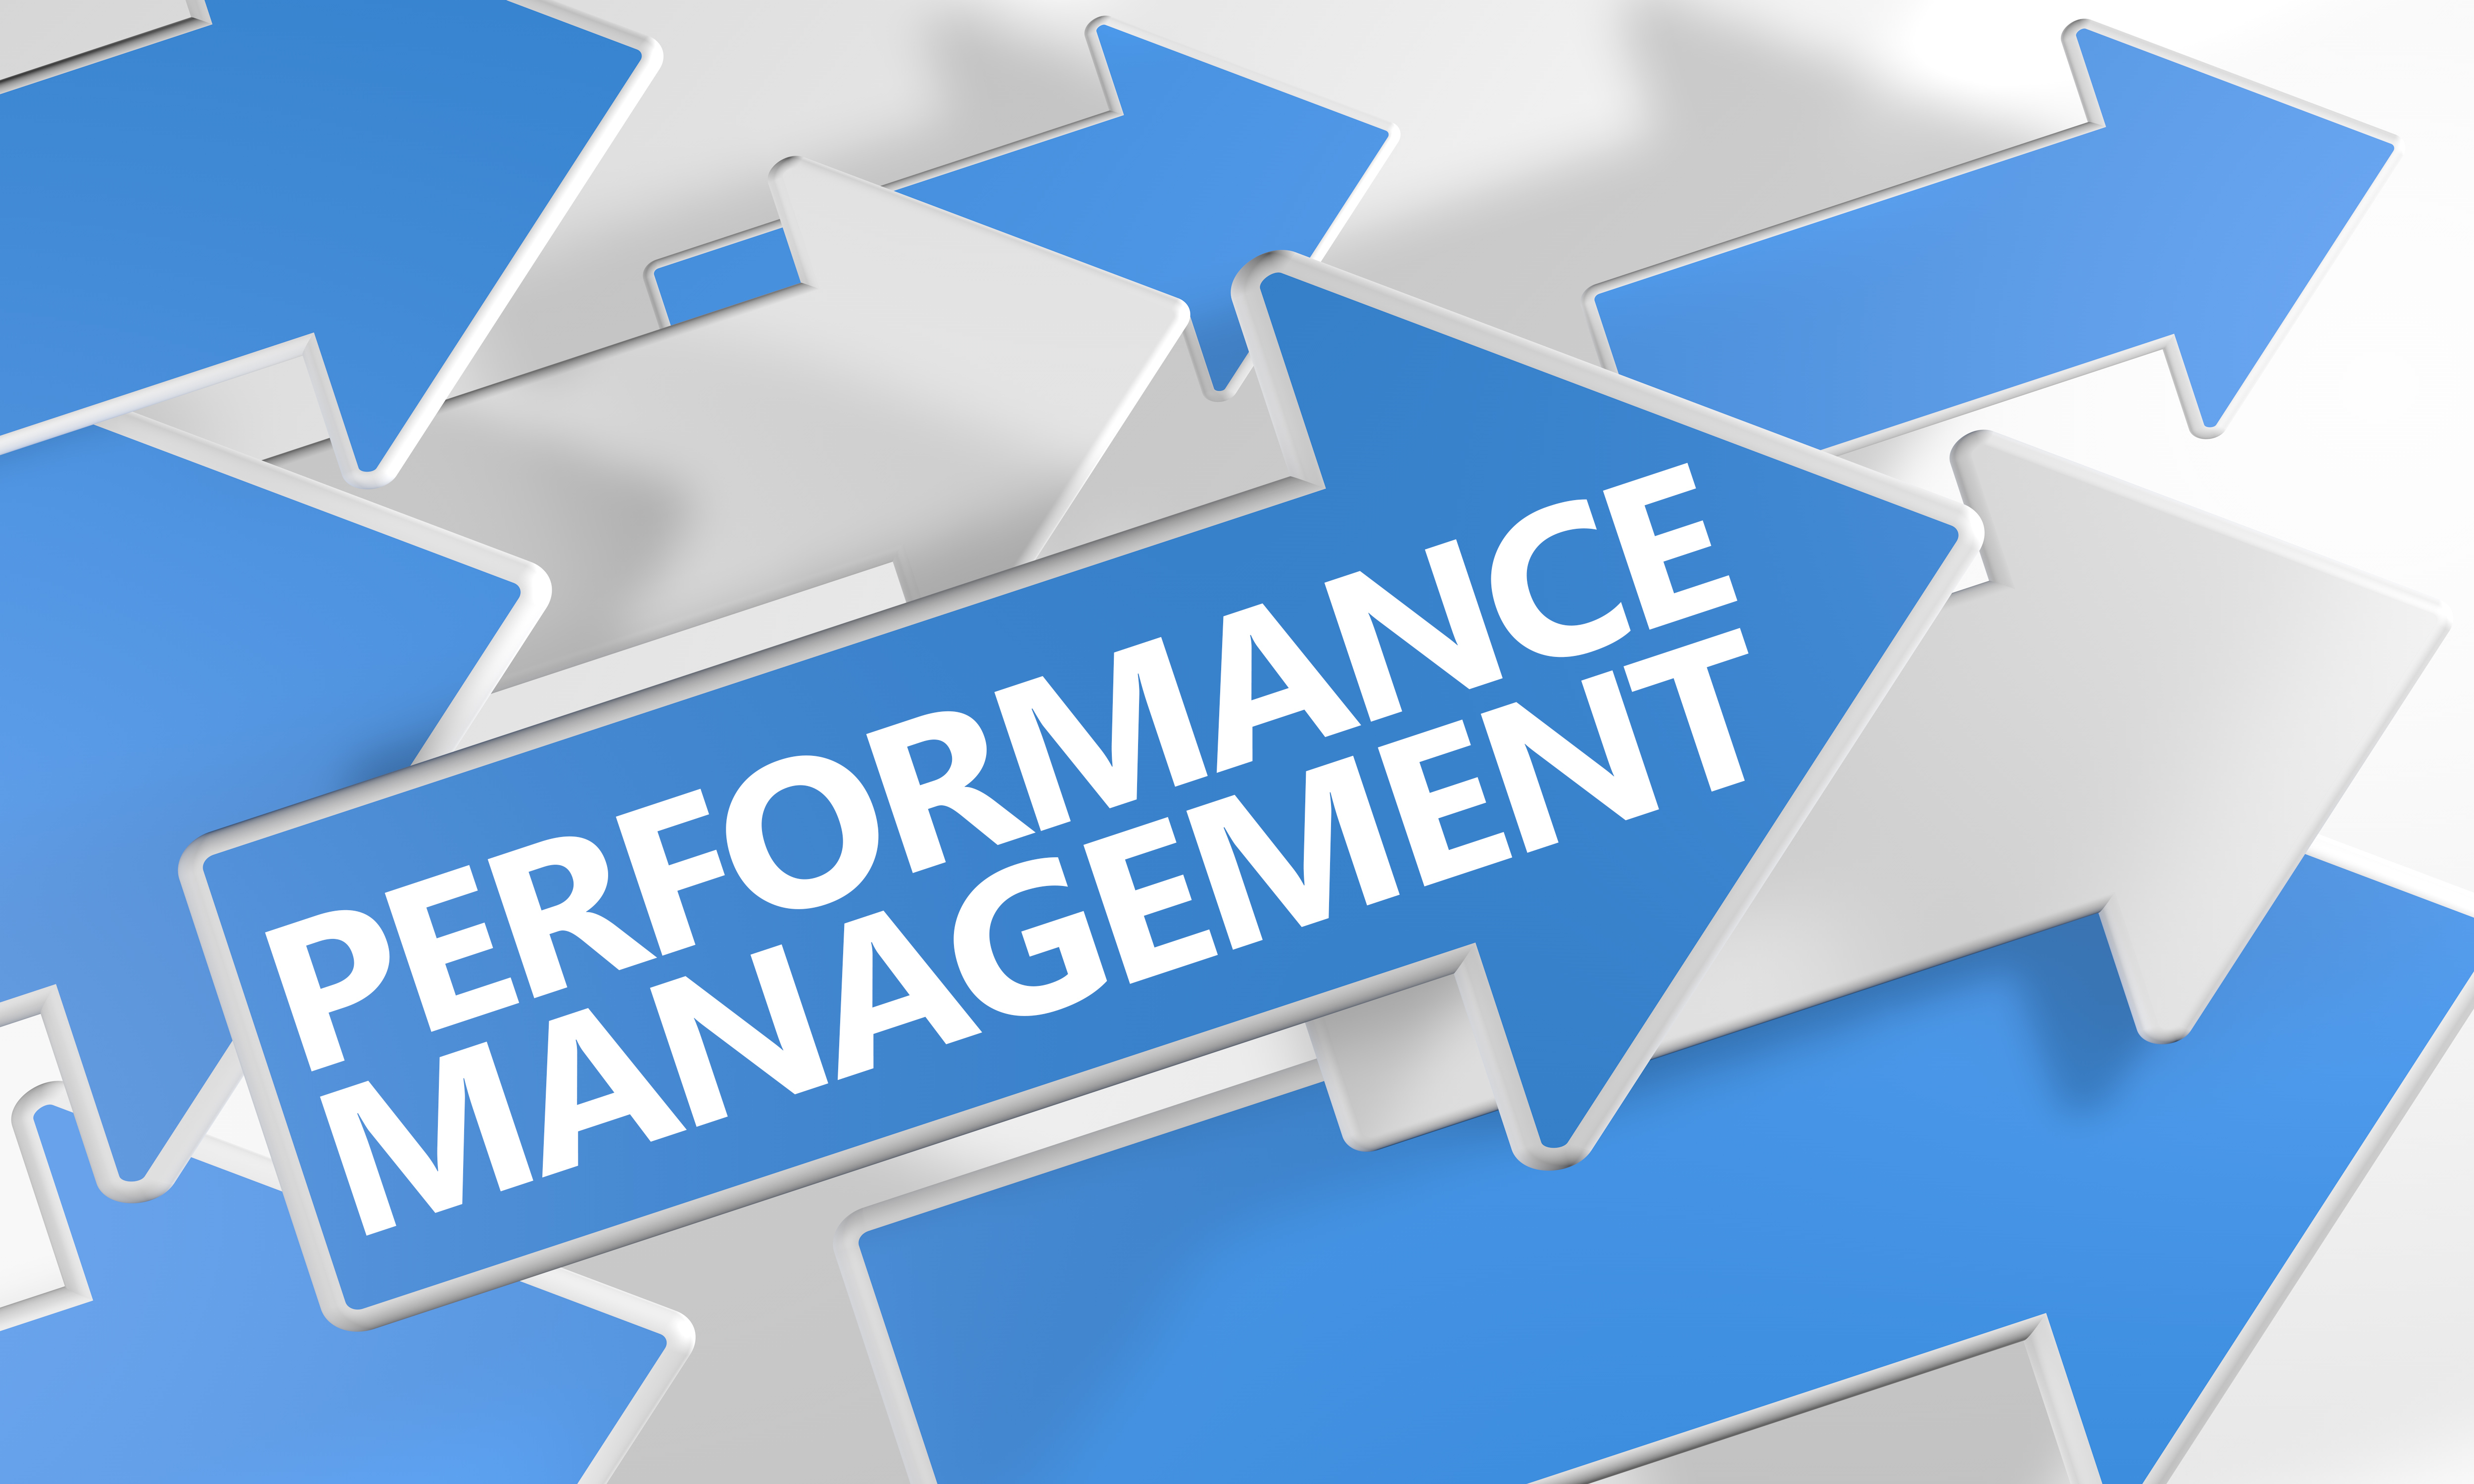 performance appraisal clipart